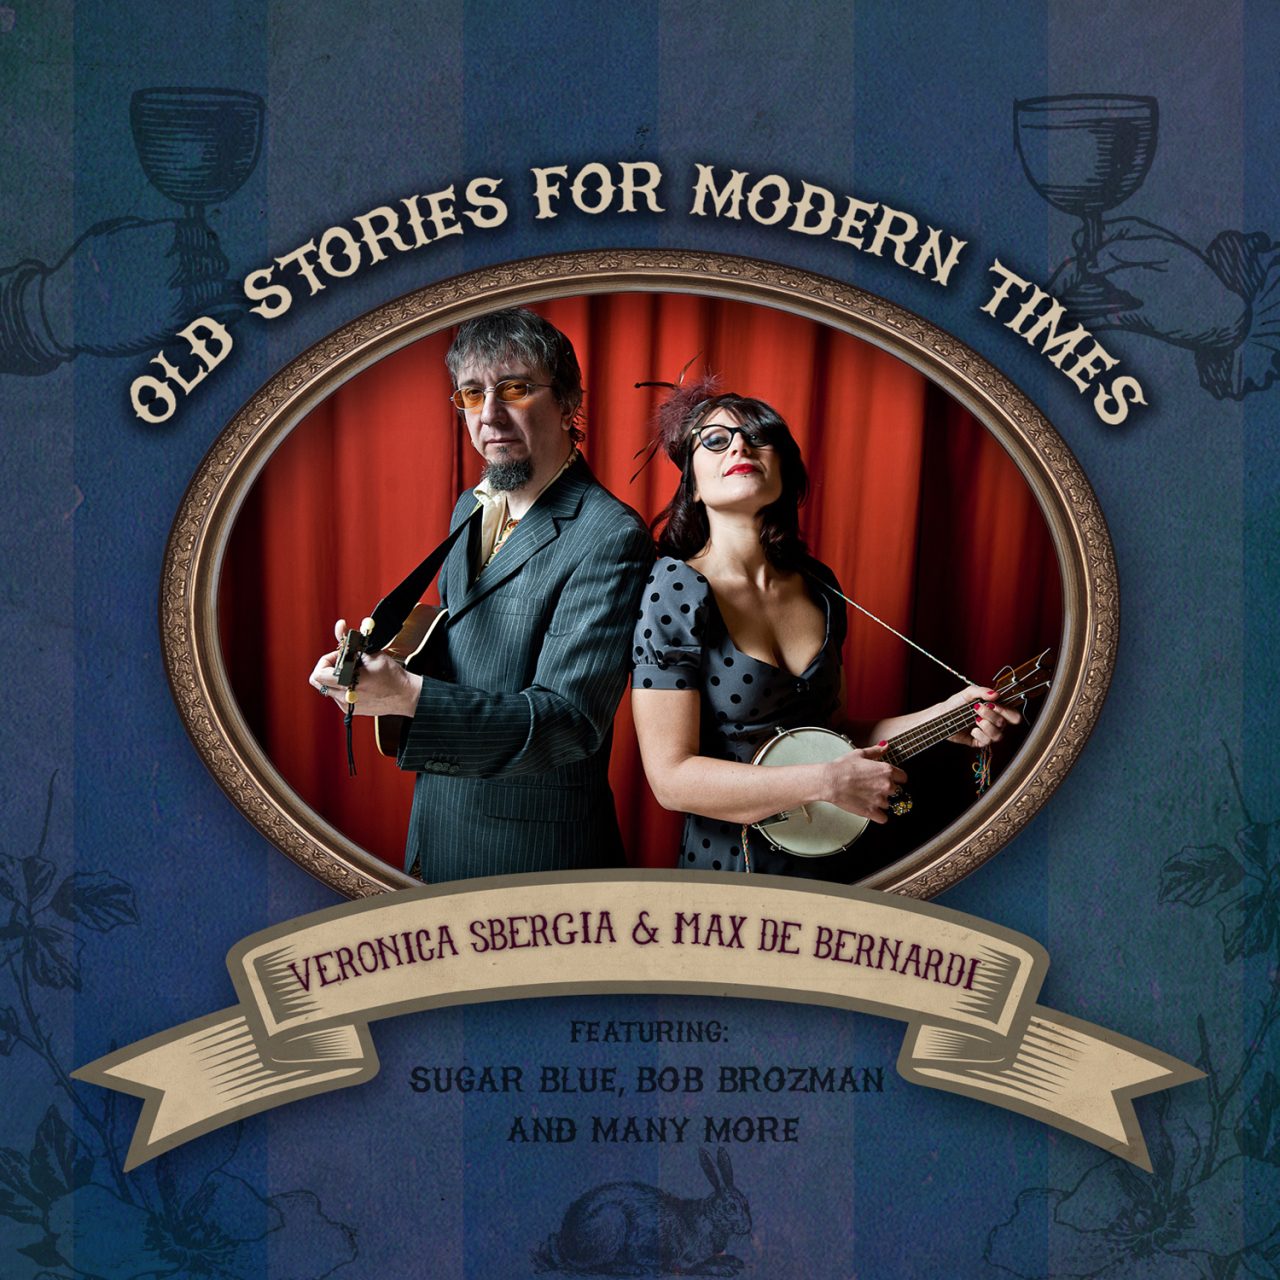 Veronica Sbergia & Max De Bernardi – Old Stories For Modern Times cover album